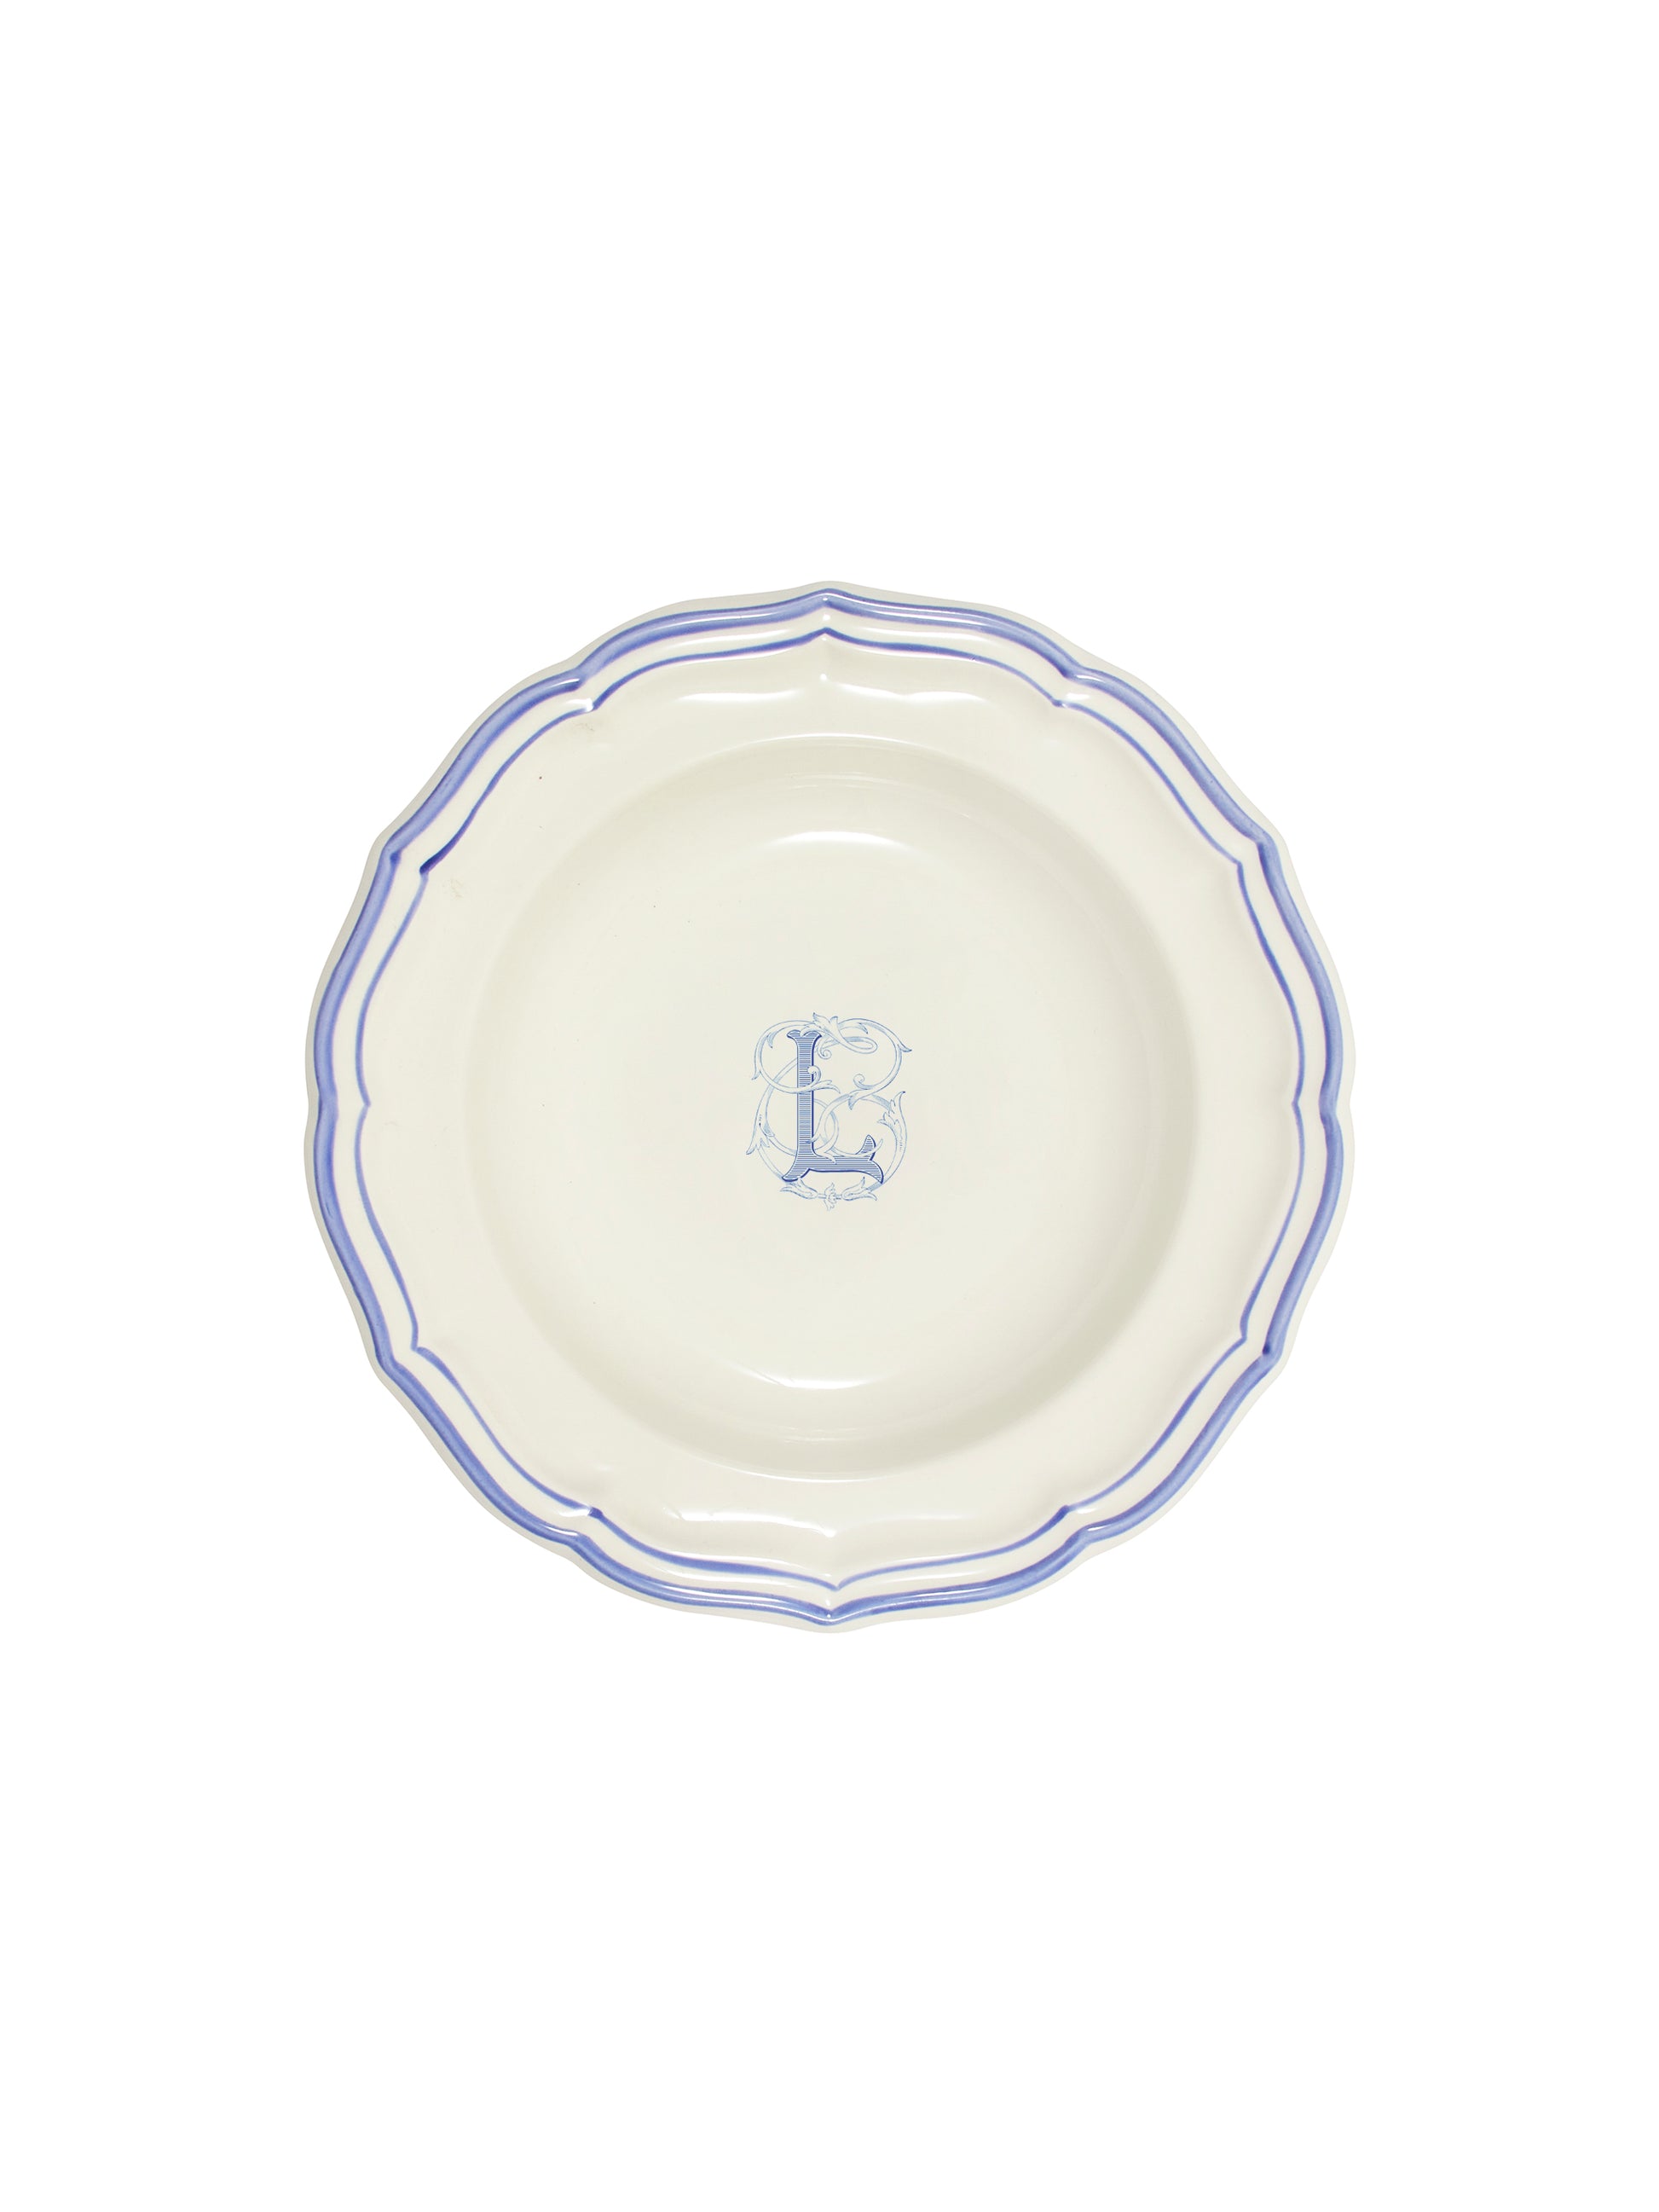 Gien Filet Bleu Monogram Soup Plate L Weston Table